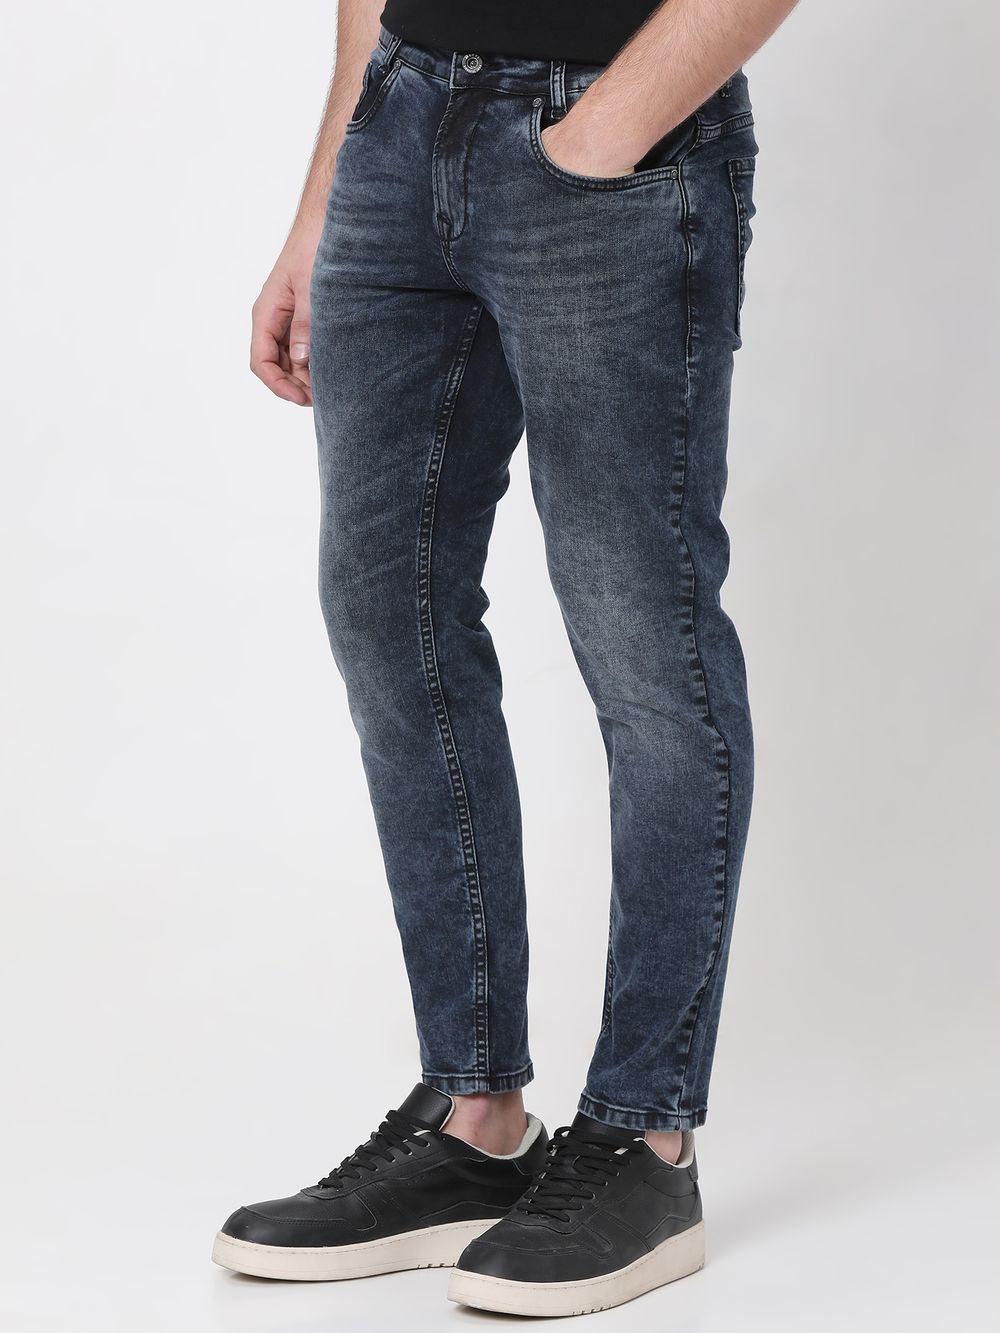 Blue Black Ankle Length Originals Stretch Jeans